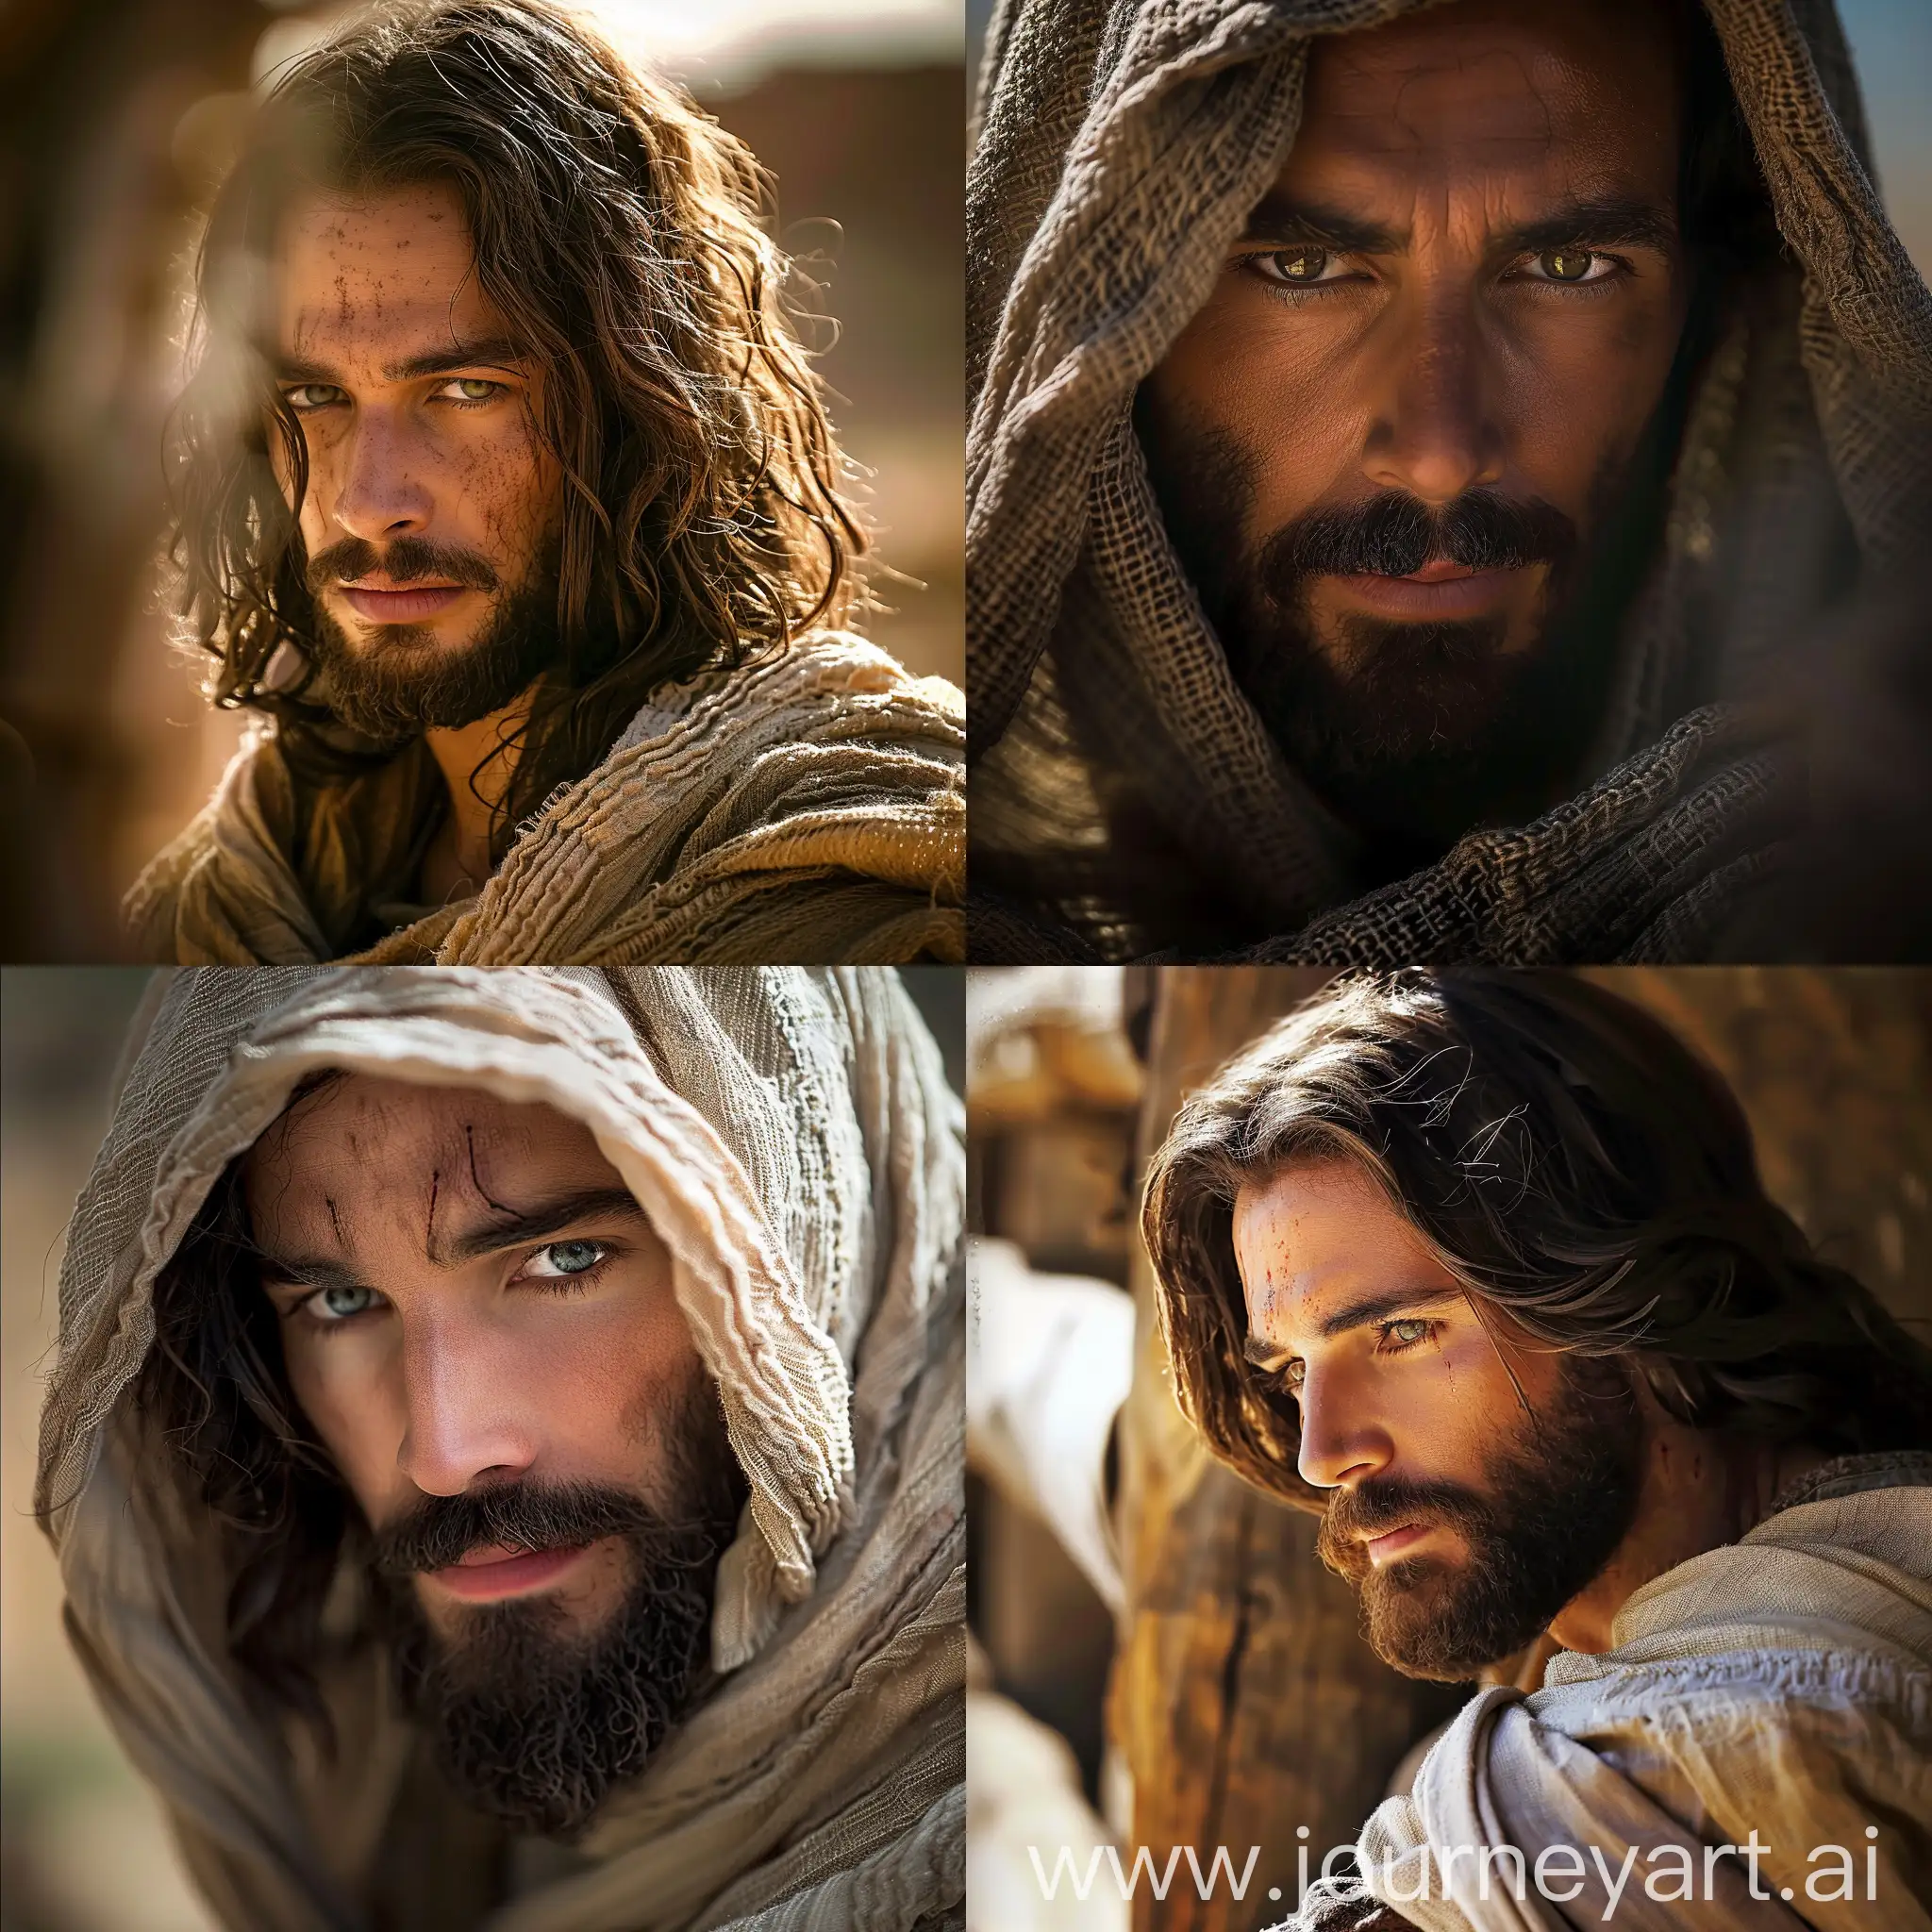 Serene-Portrait-of-Jesus-with-Compassionate-Gaze